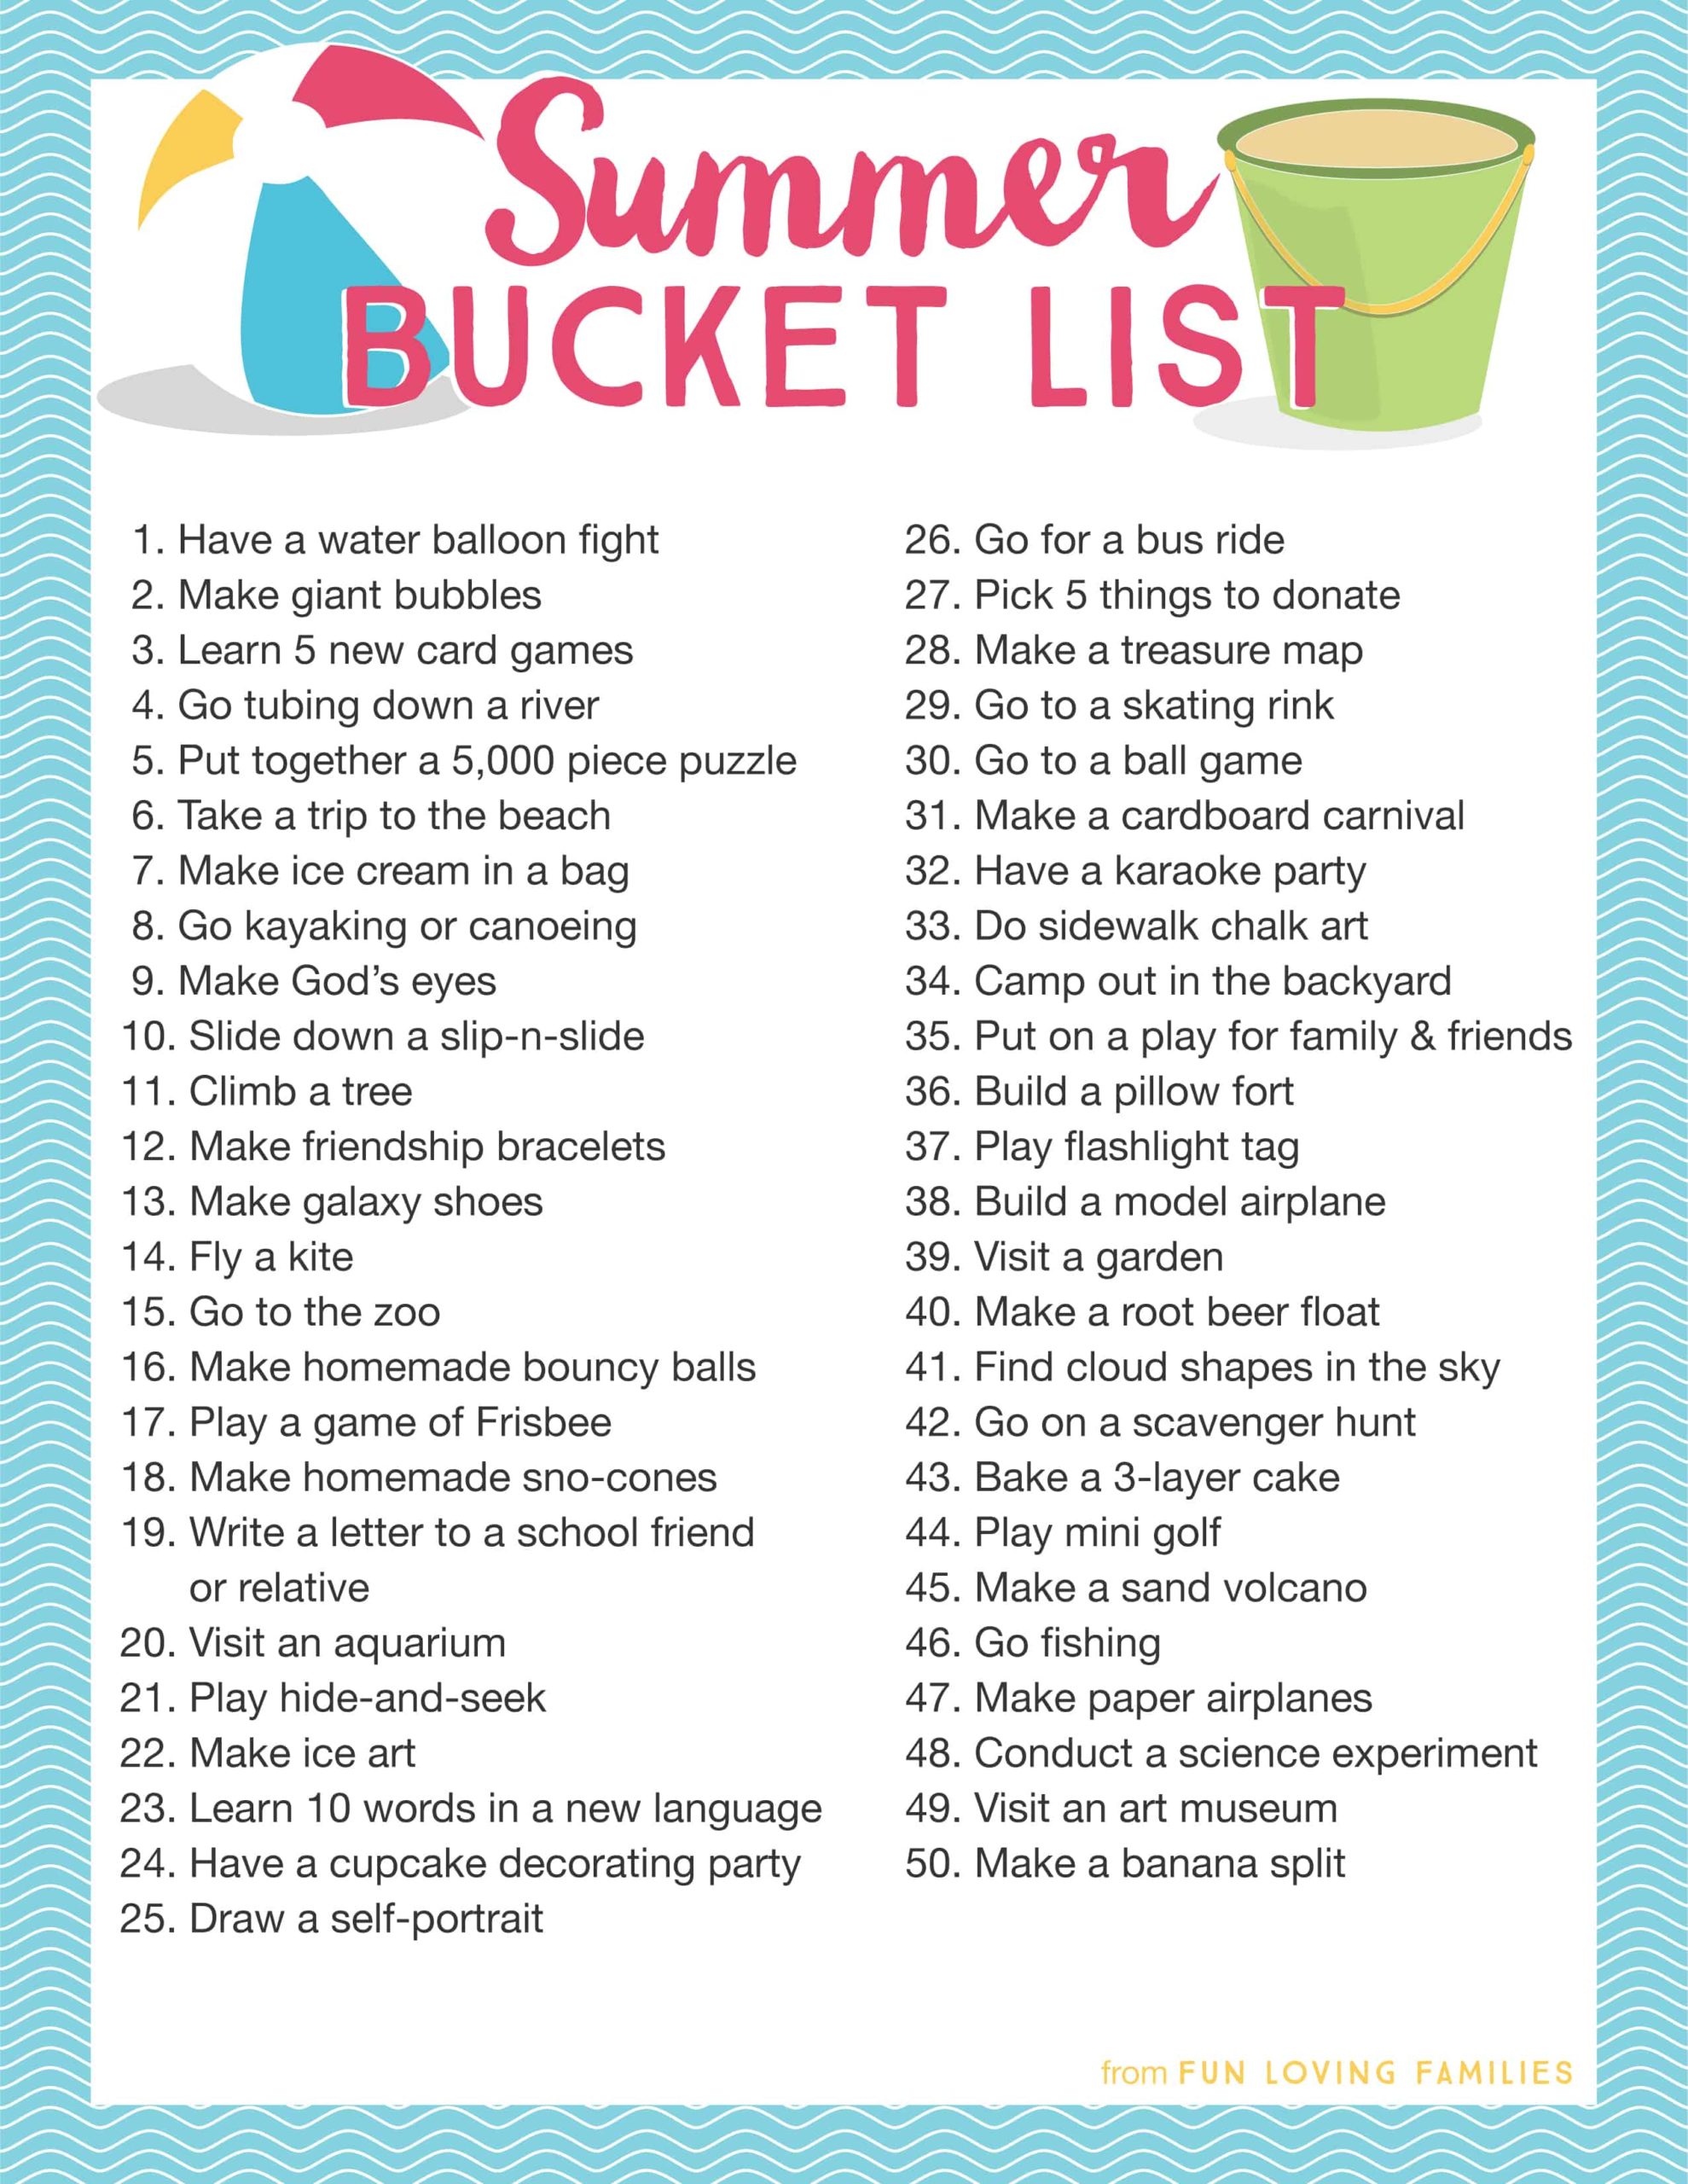 Summer Bucket List for Families Fun Loving Families